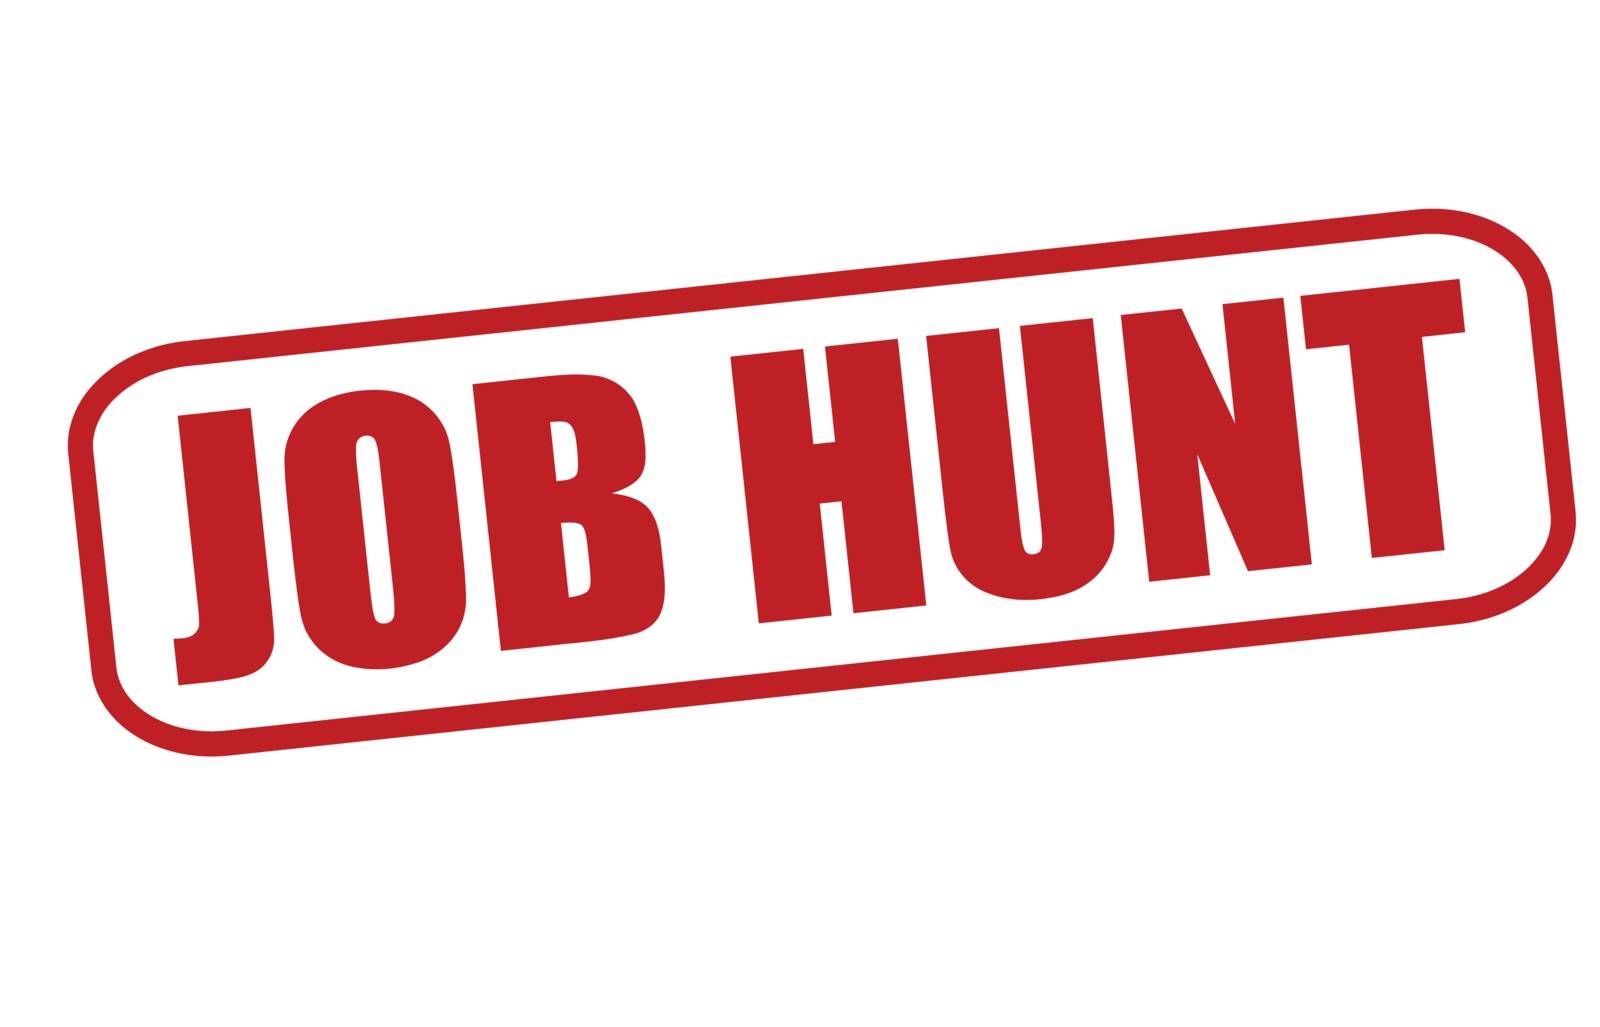 Job hunt by carmenbobo